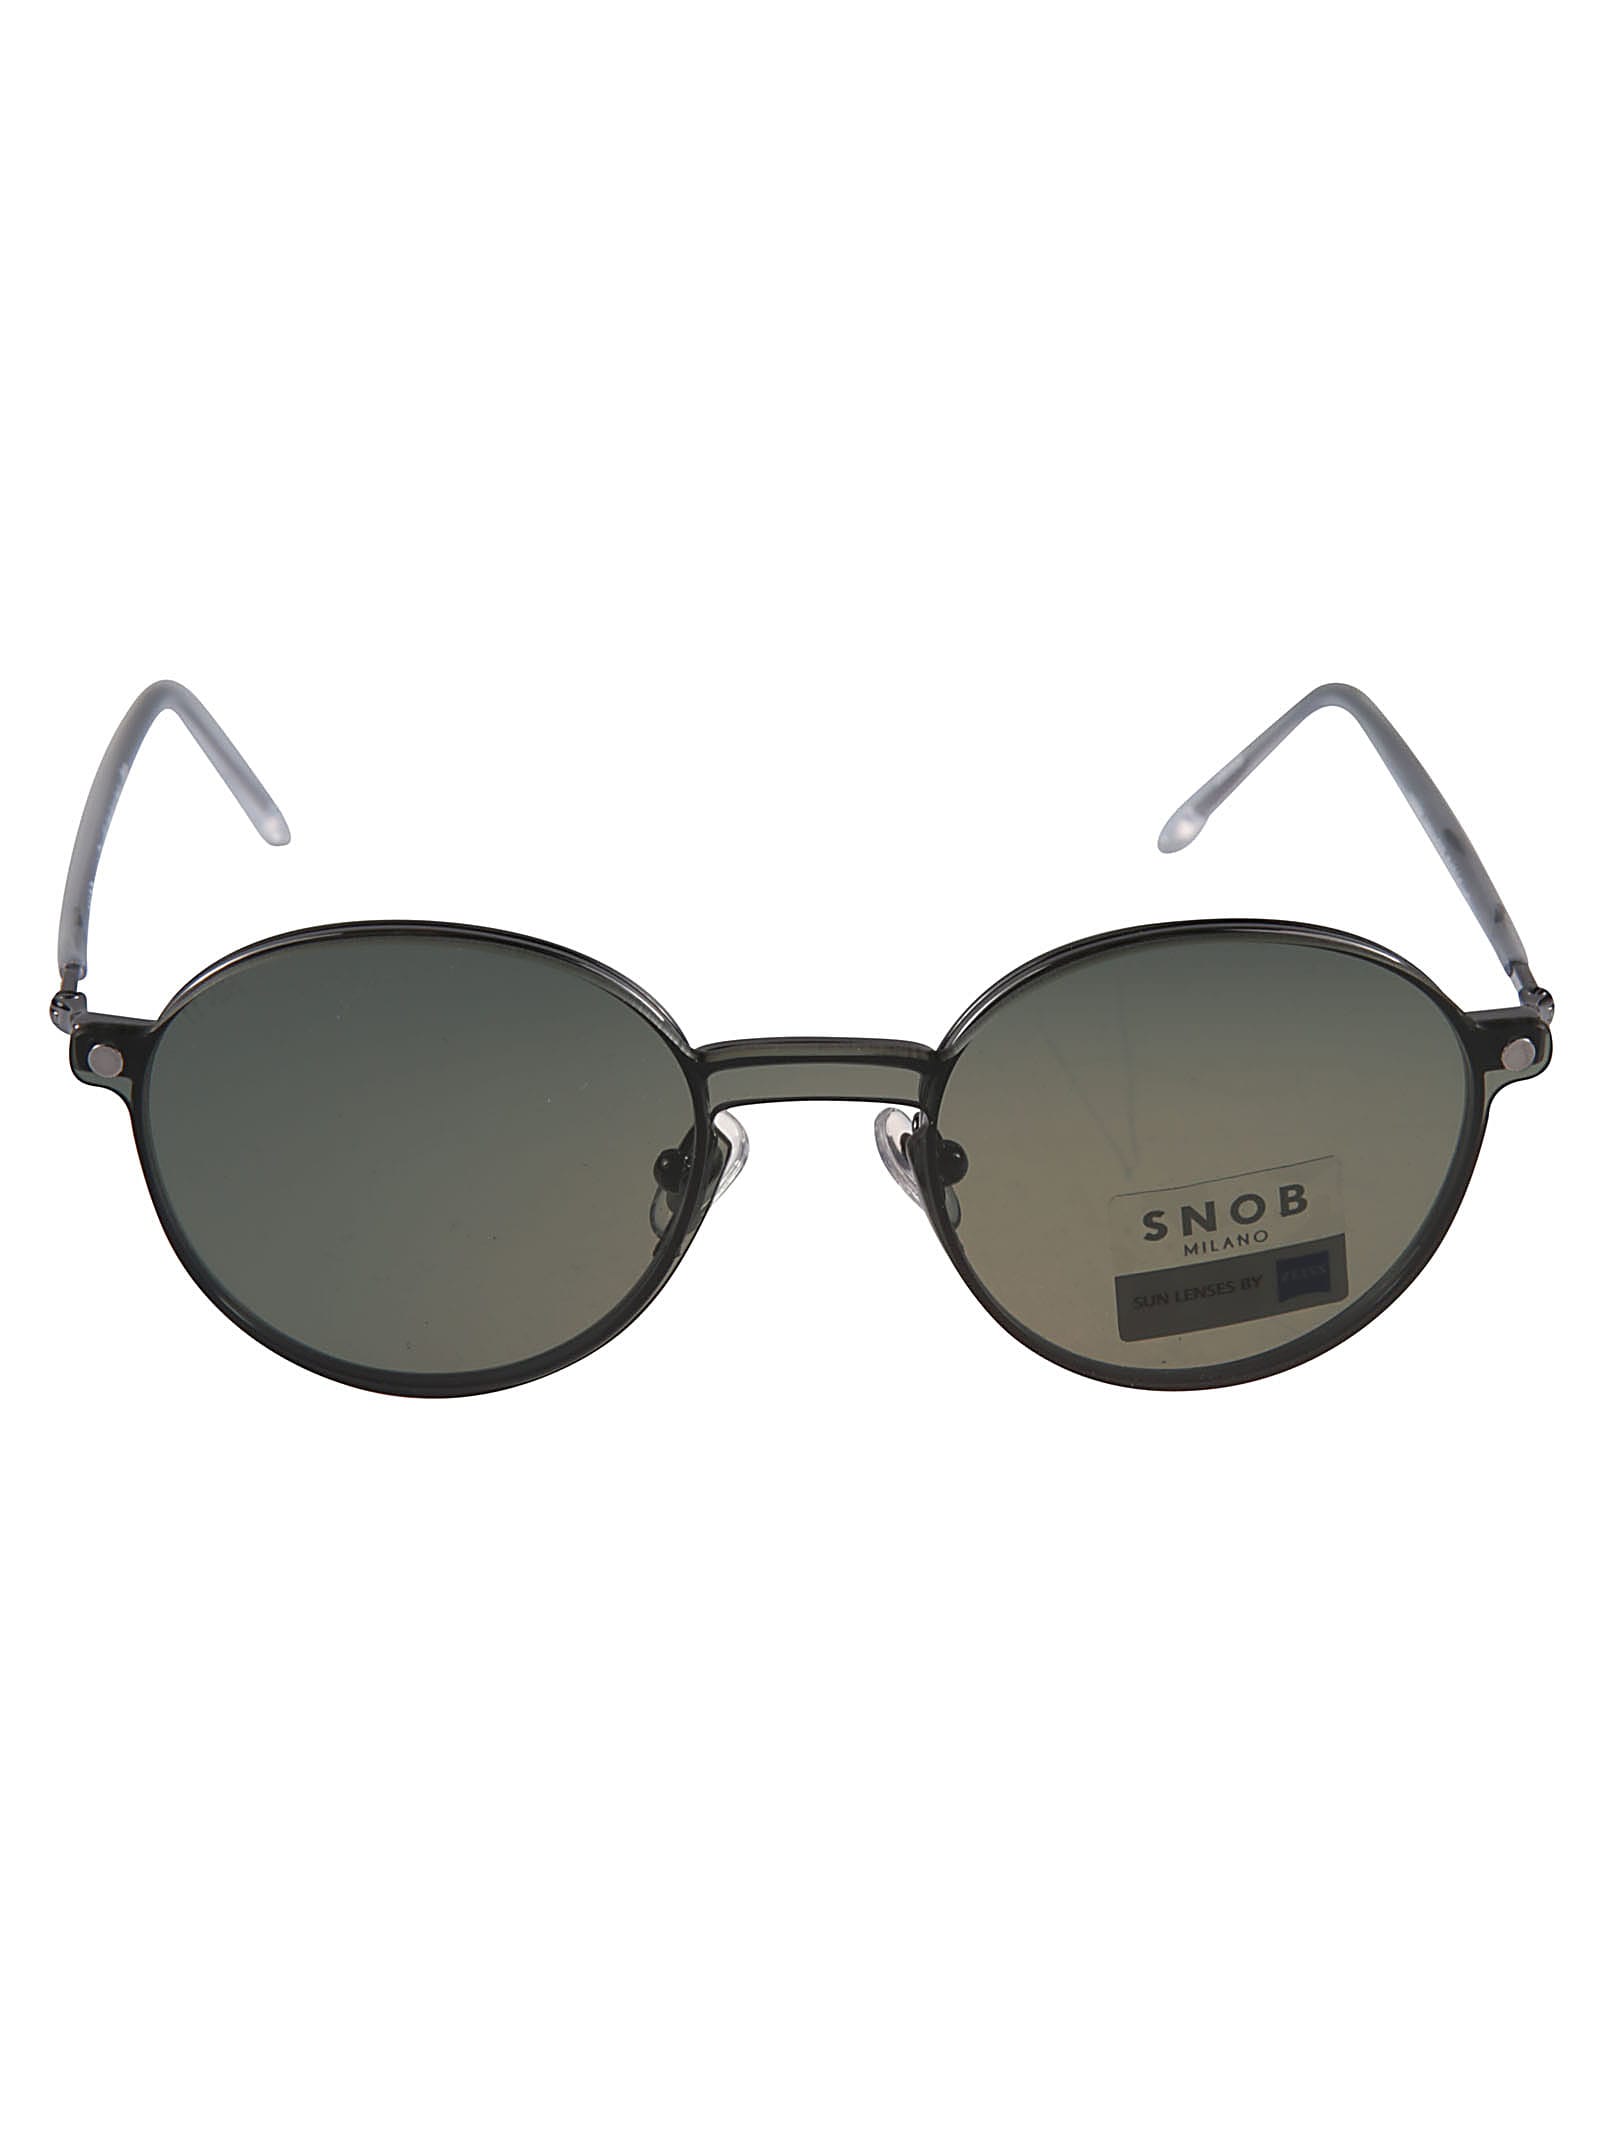 Snob Milano Round Frame Removable Lens Sunglasses